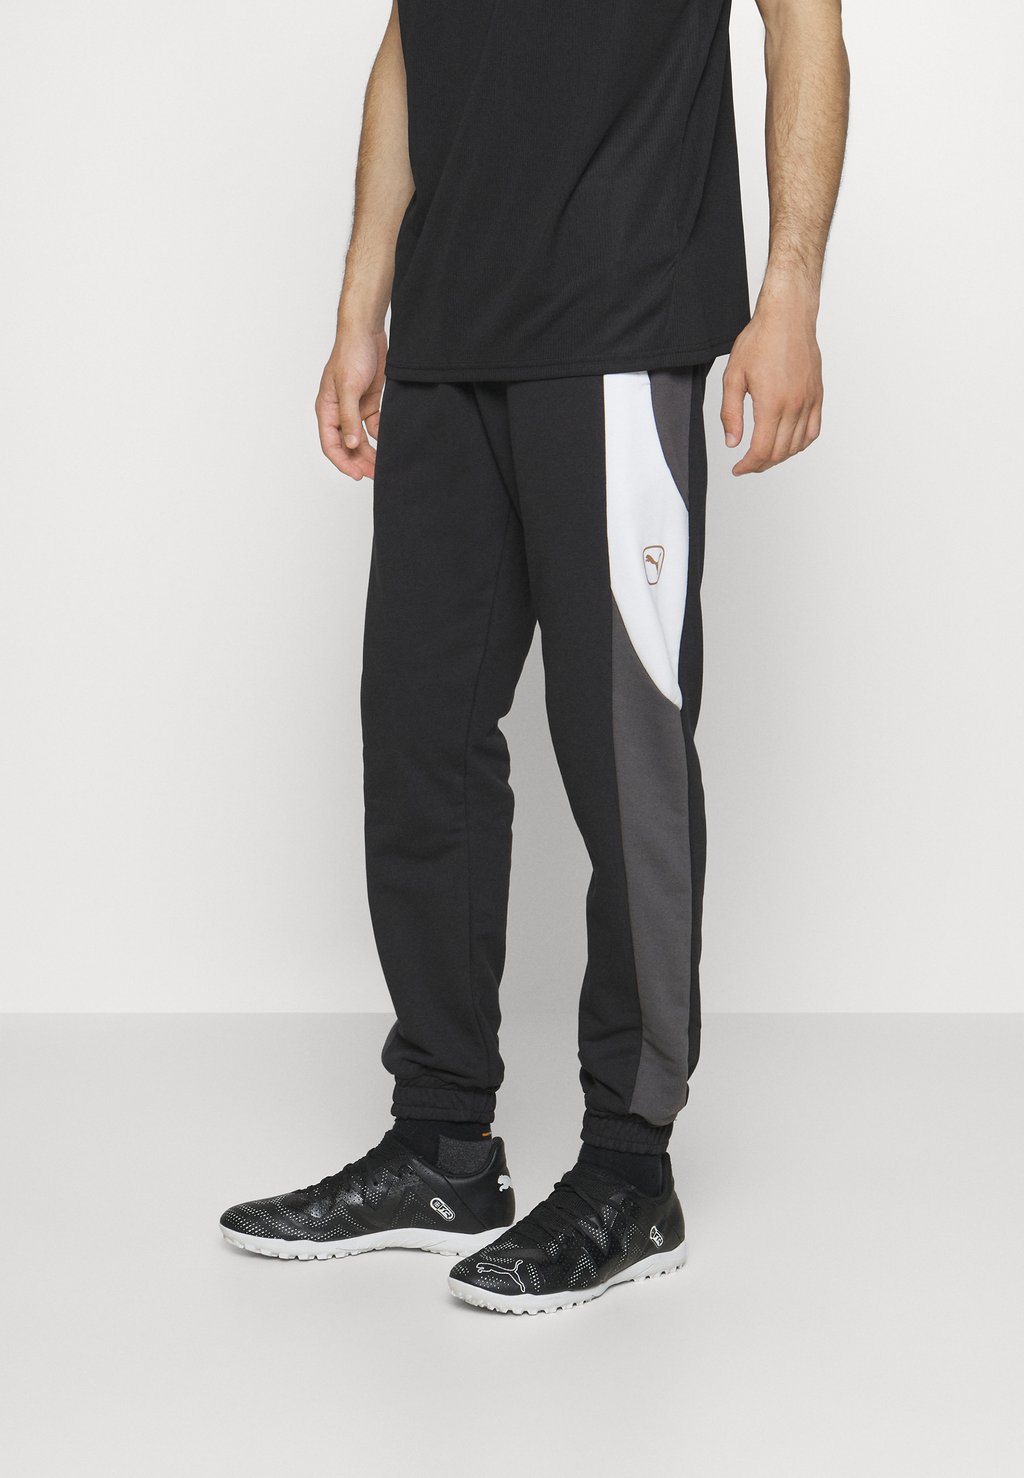 Спортивные брюки King Pants Puma, цвет puma black/shadow gray/puma white